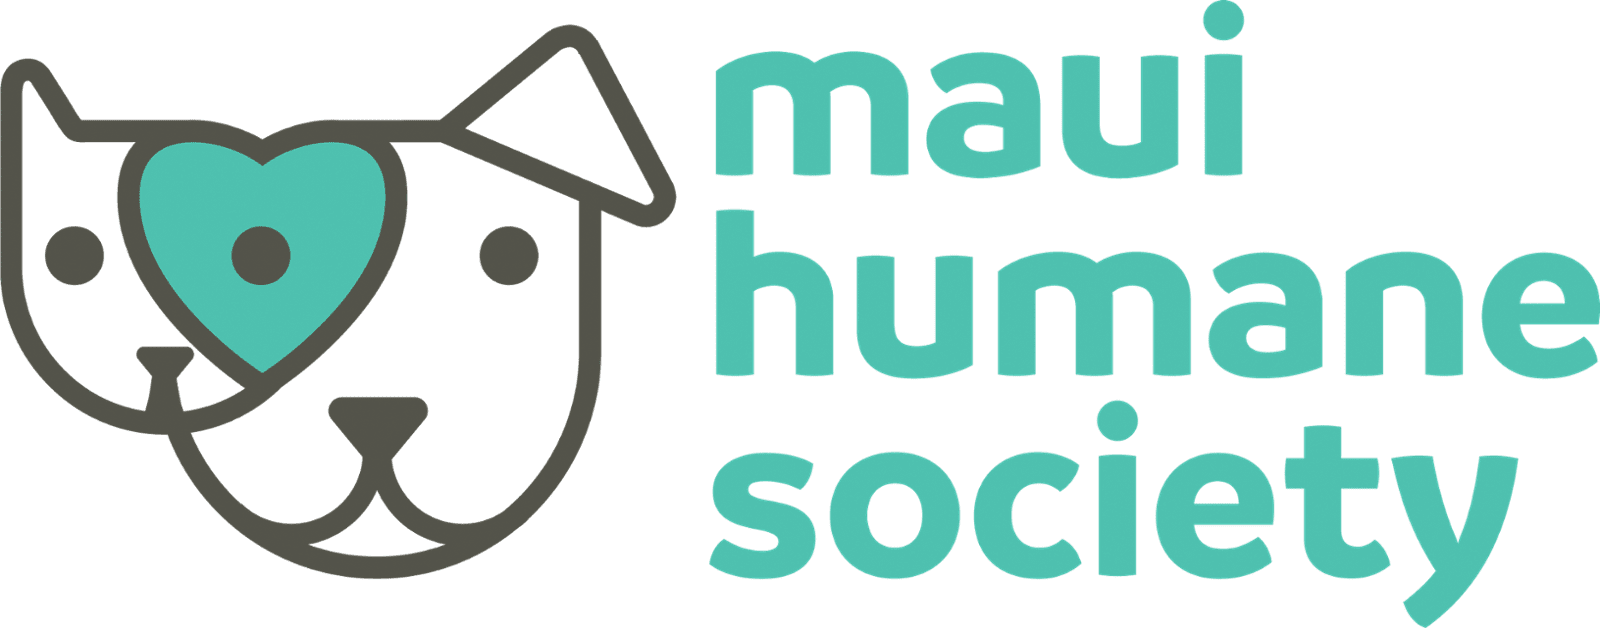 Maui Humane Society